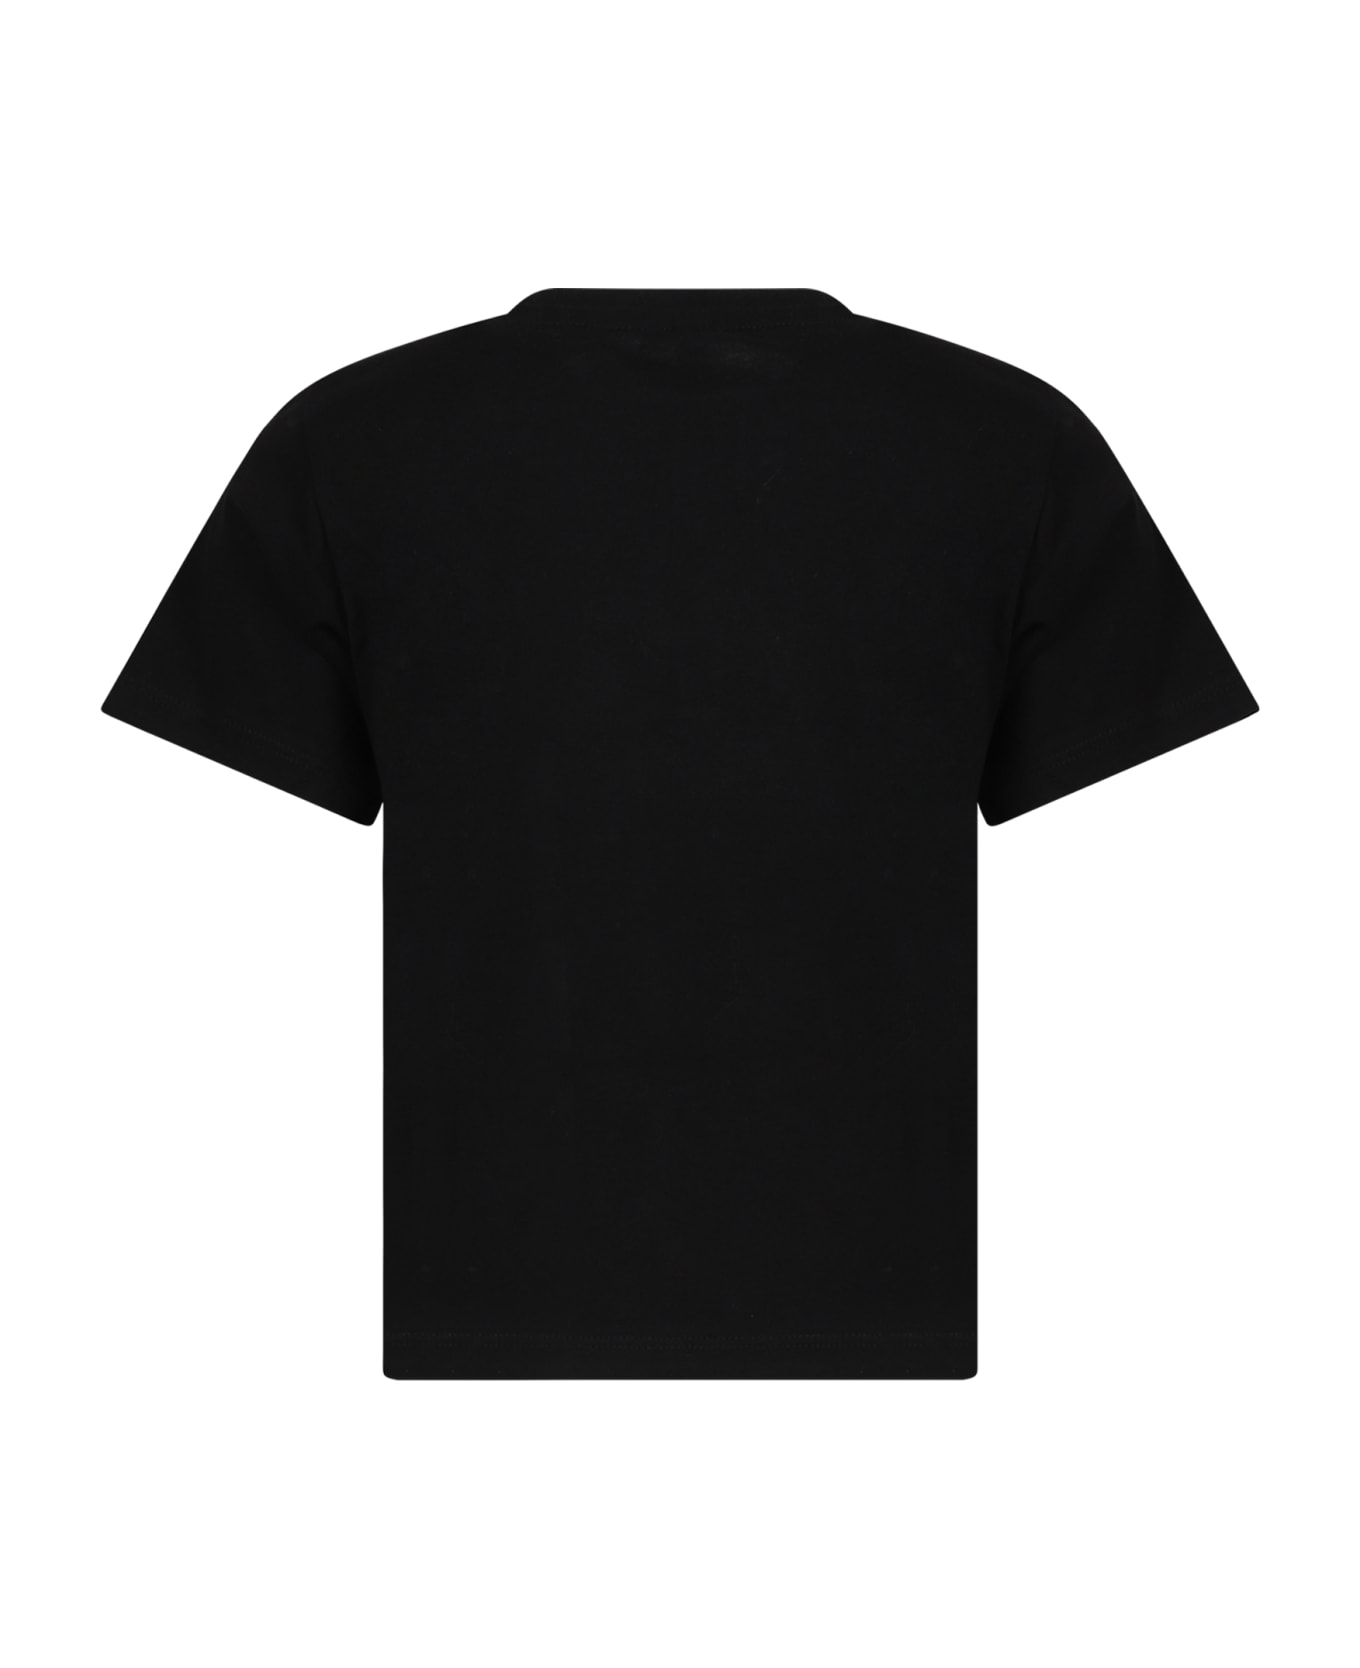 Stella McCartney Kids Black T-shirt For Boy With Print - Black